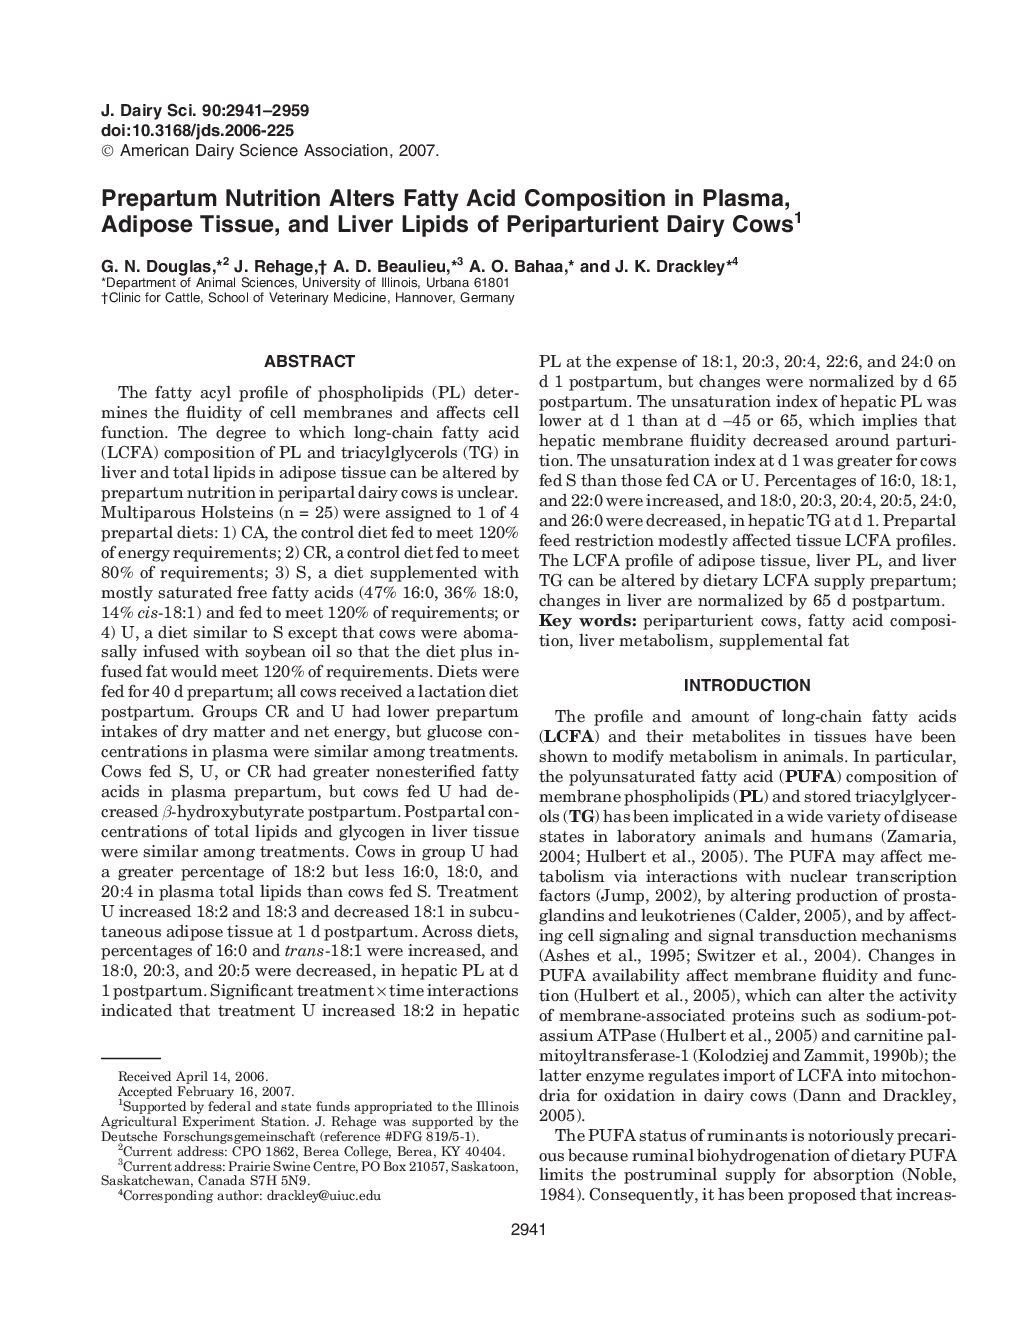 Prepartum Nutrition Alters Fatty Acid Composition in Plasma, Adipose Tissue, and Liver Lipids of Periparturient Dairy Cows